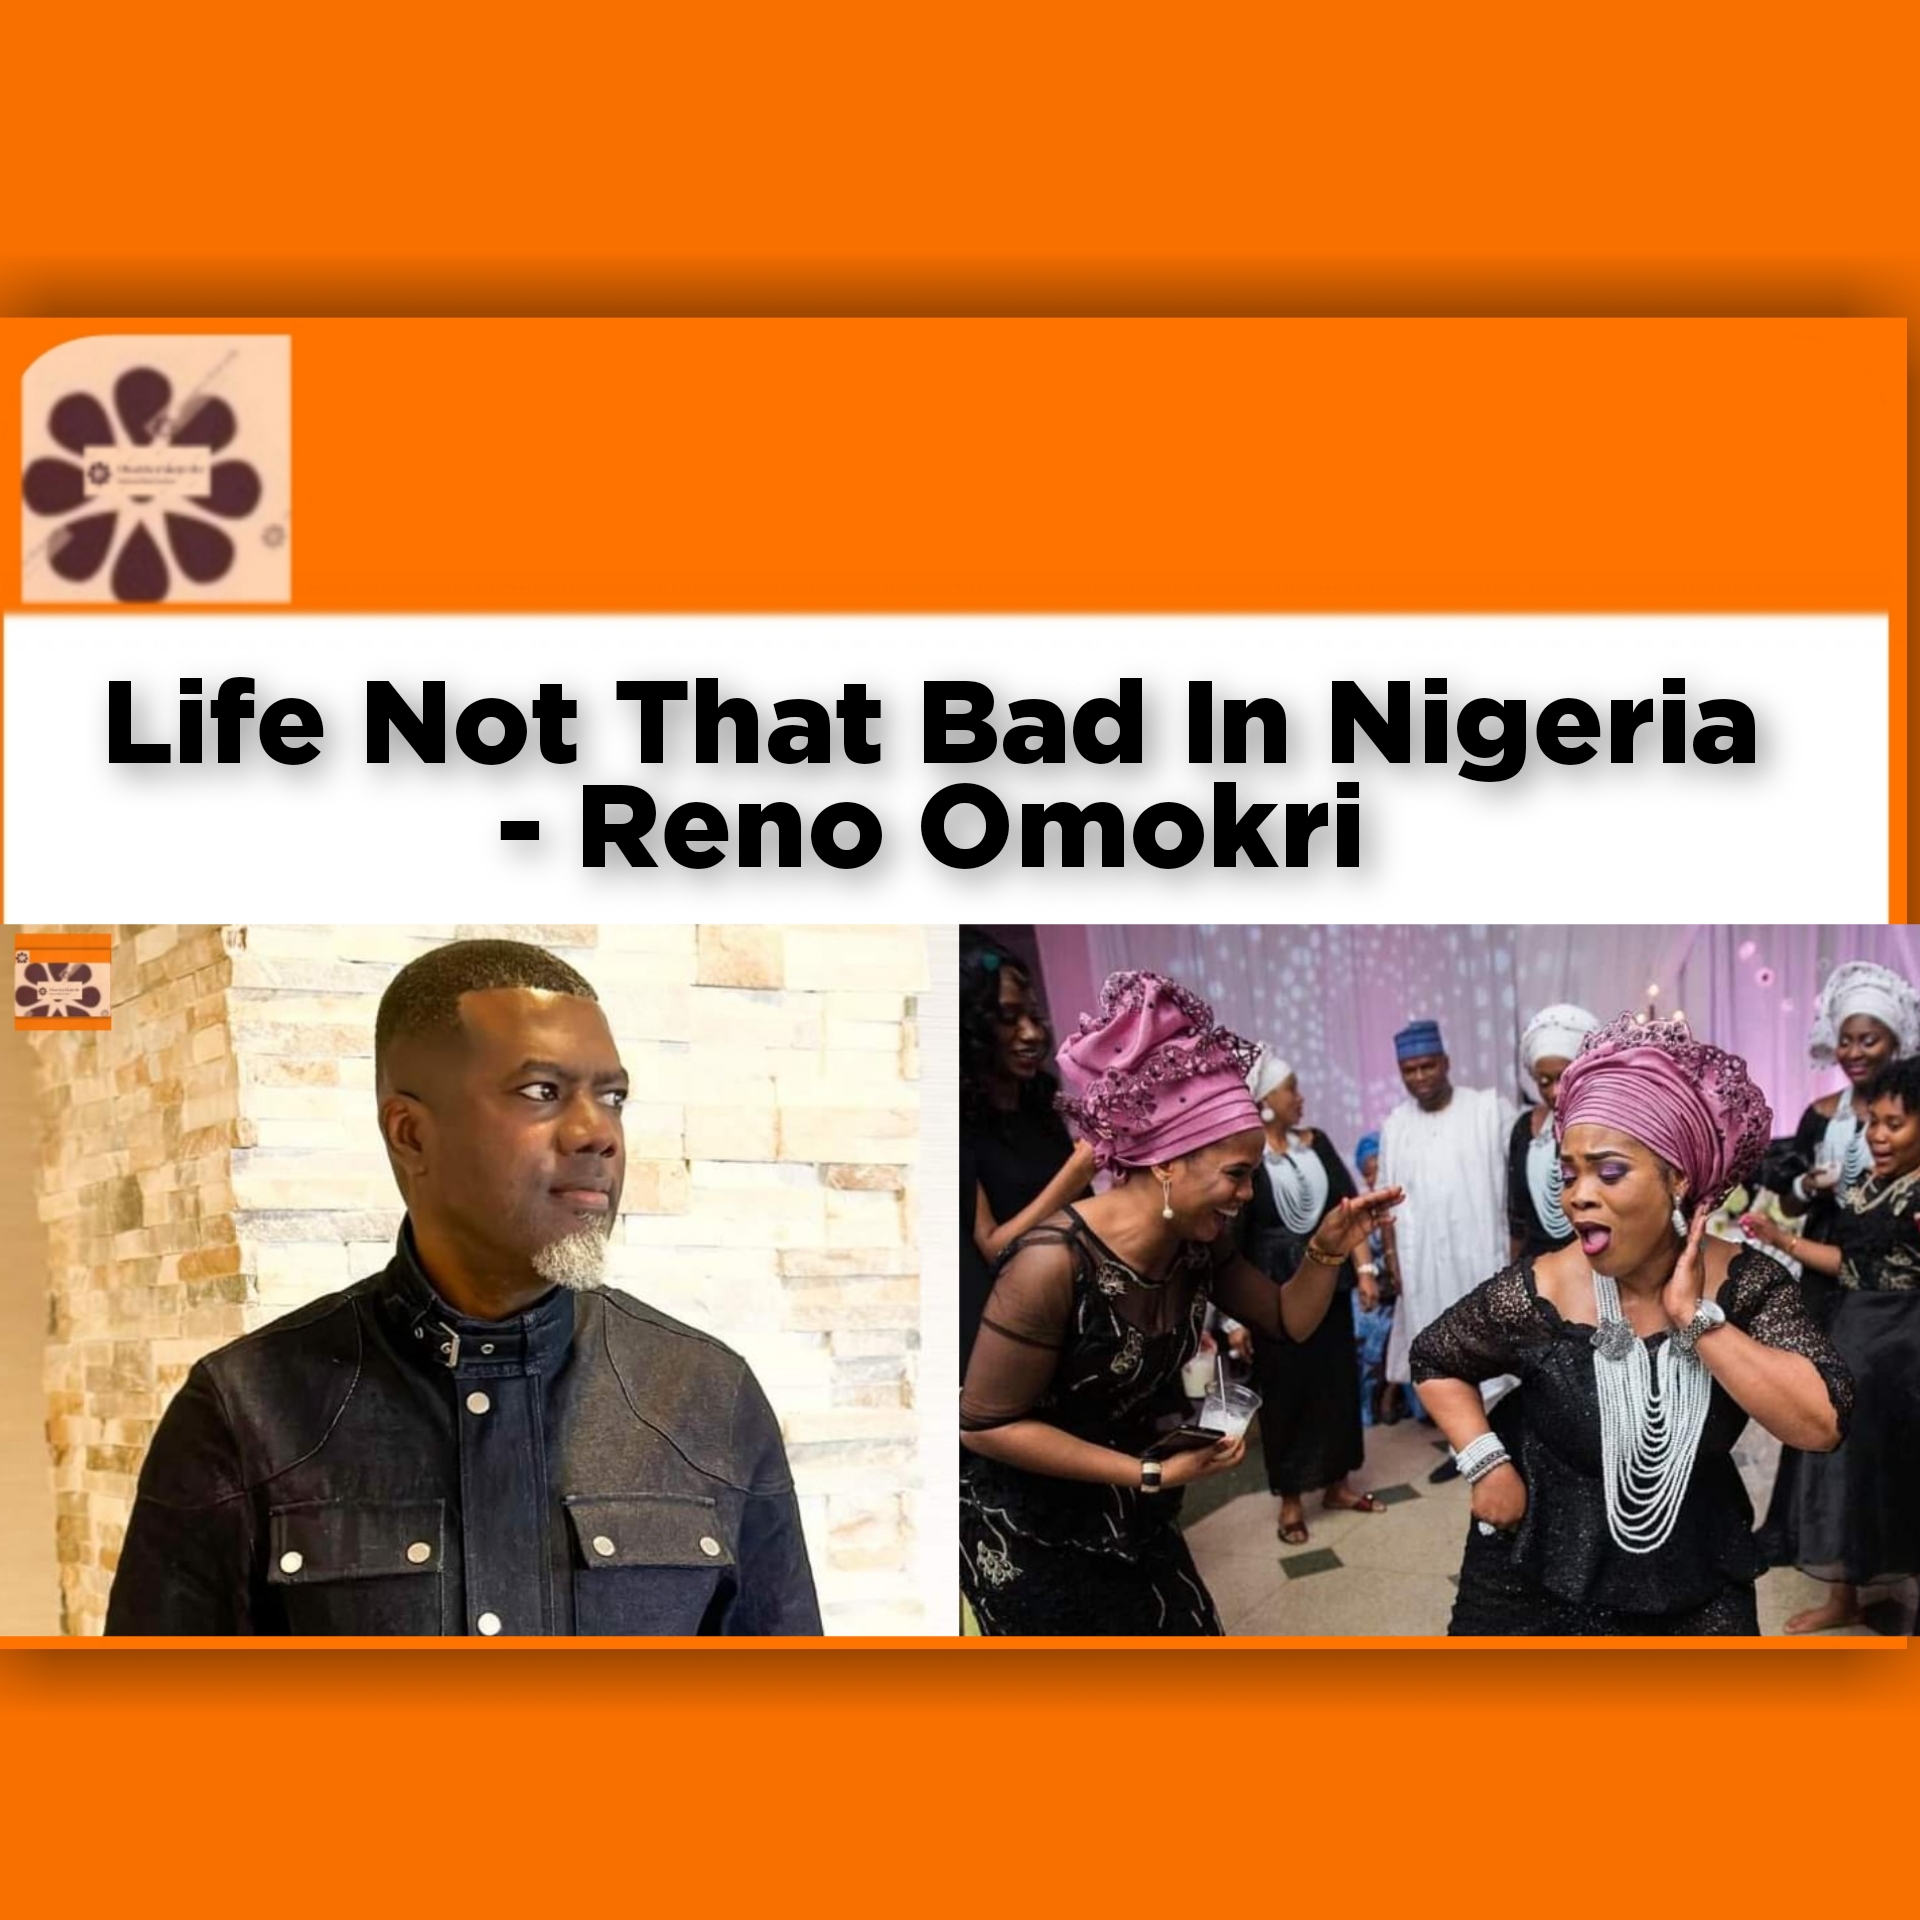 Life Not That Bad In Nigeria - Reno Omokri ~ OsazuwaAkonedo #election